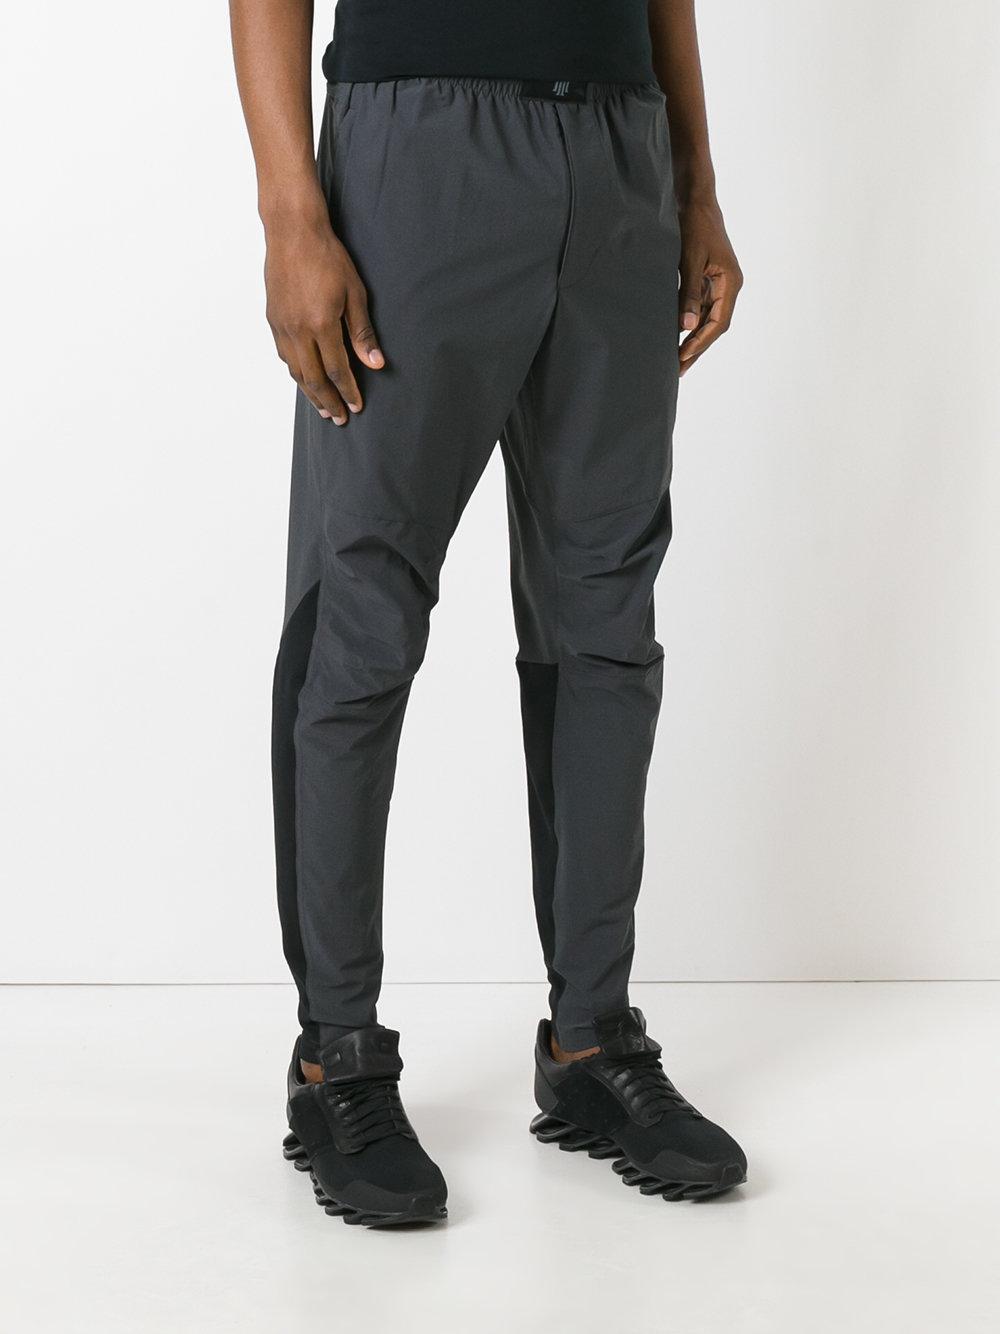 Lyst - Nike Flex Kyrie Track Pants in Gray for Men